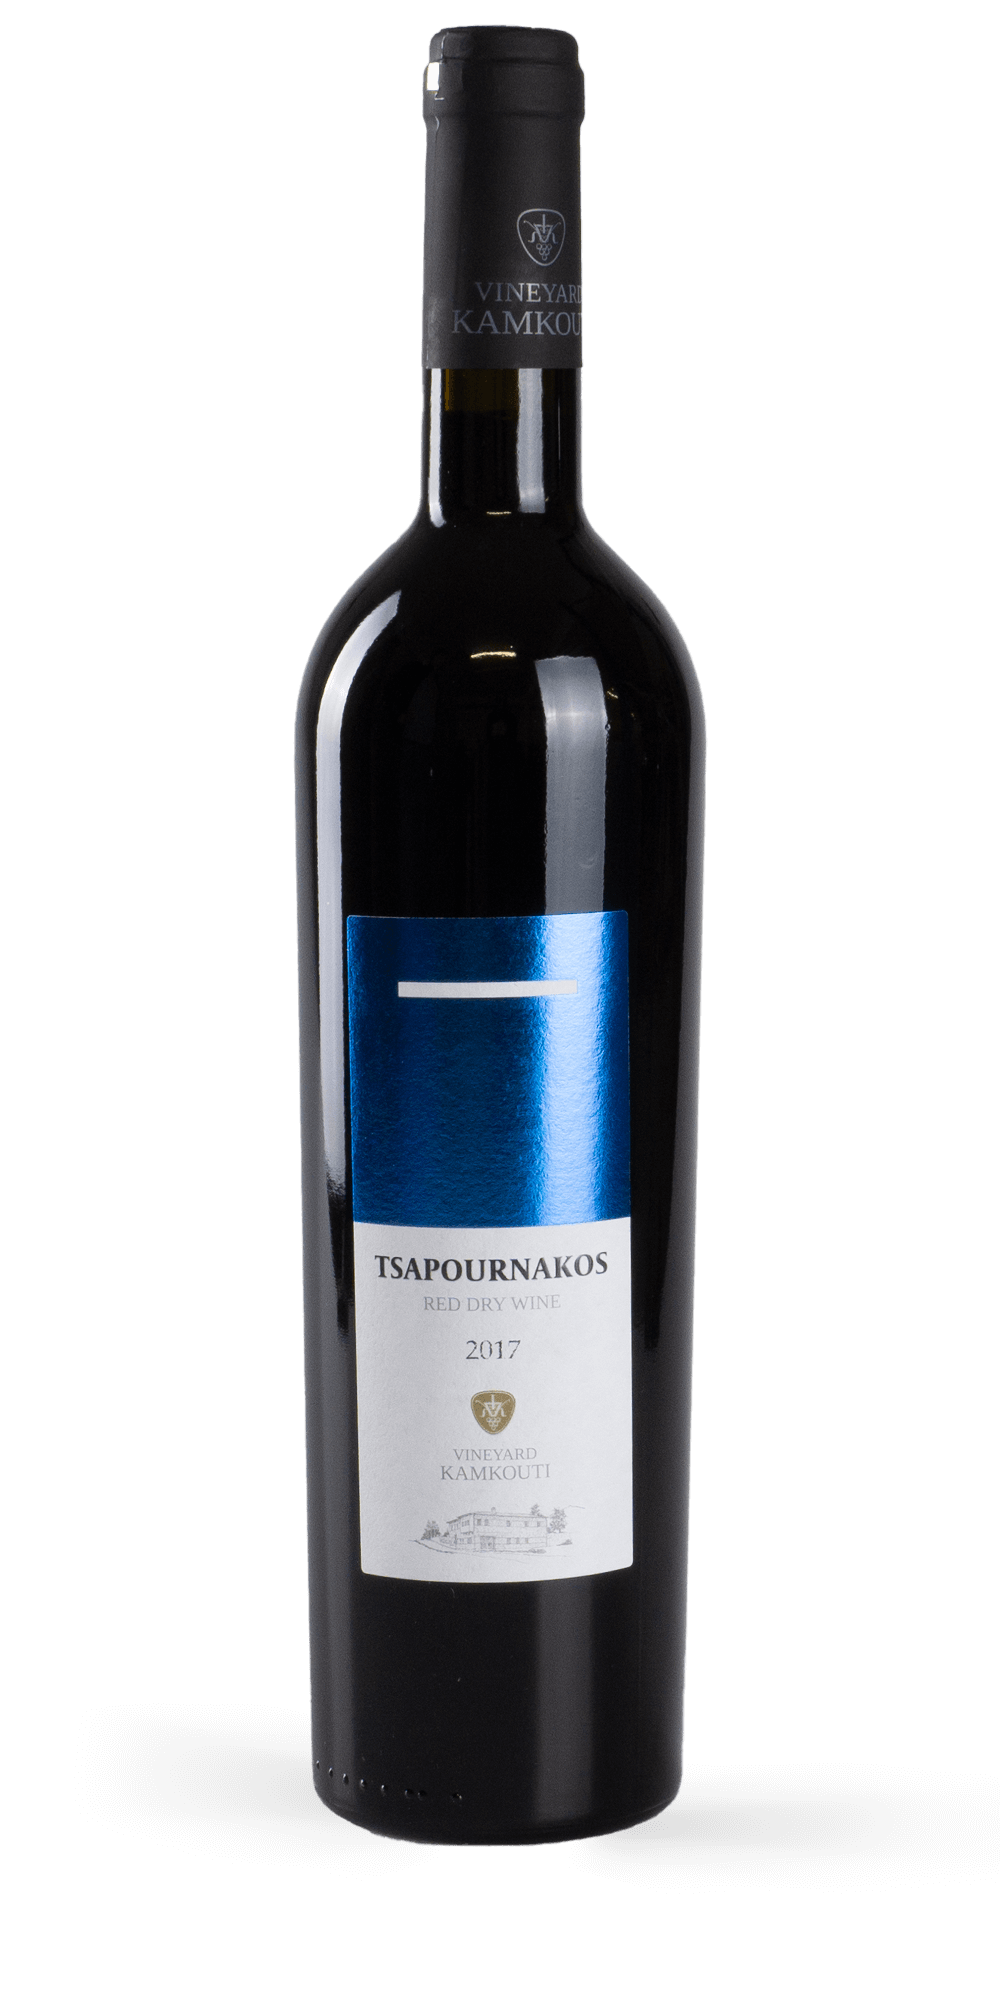 Tsapournakos 2017 - Kamkoutis Vineyards